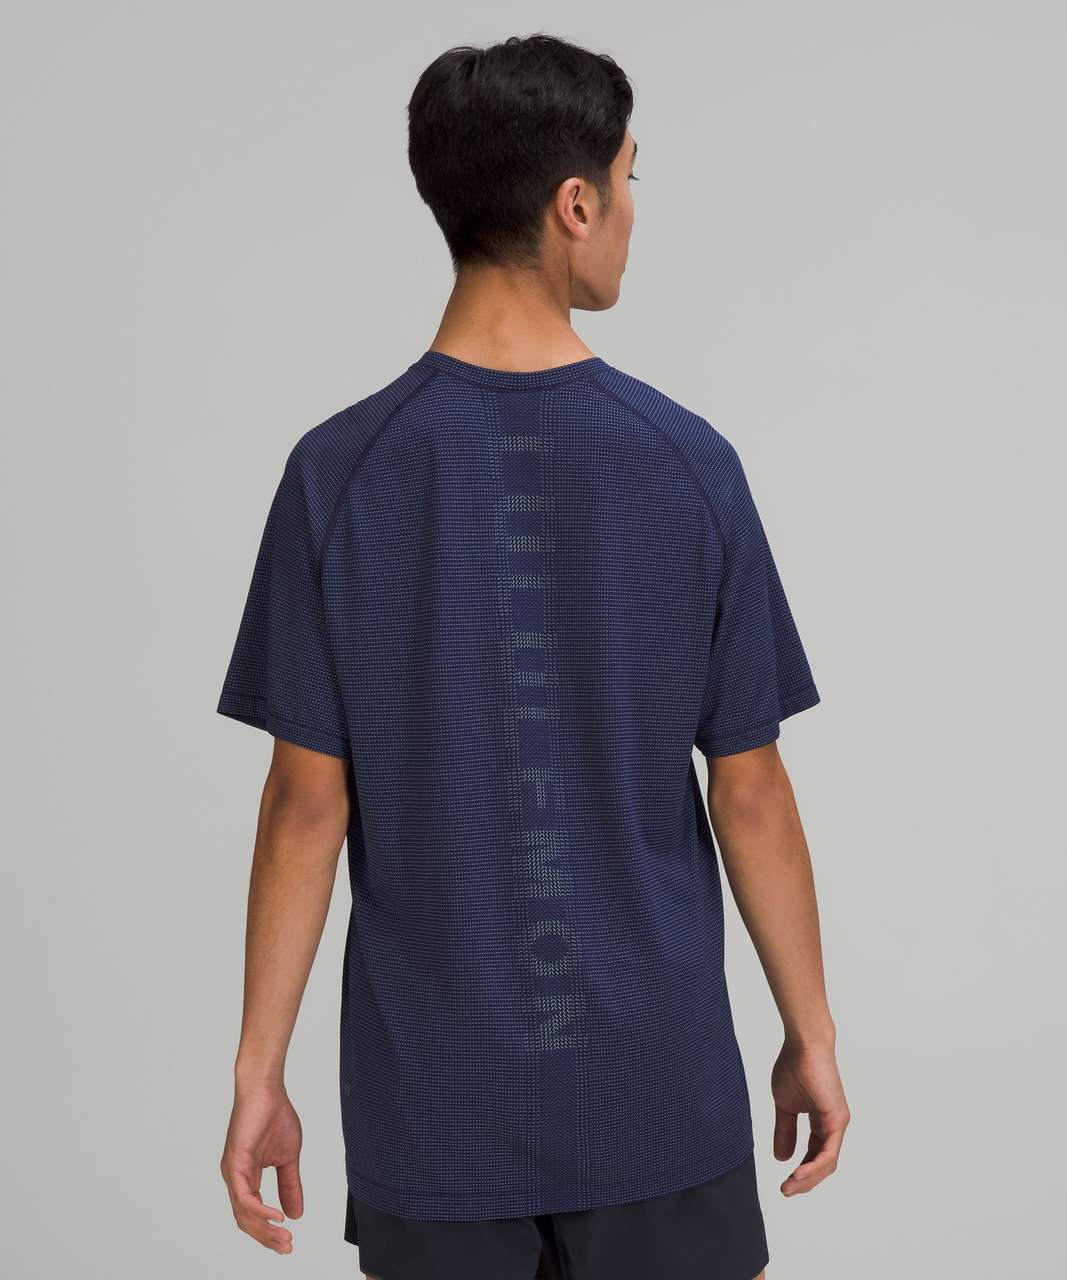 Lululemon Metal Vent Tech Short Sleeve Shirt 2.0 - Line Graphic Delicate Mint / Night Sea